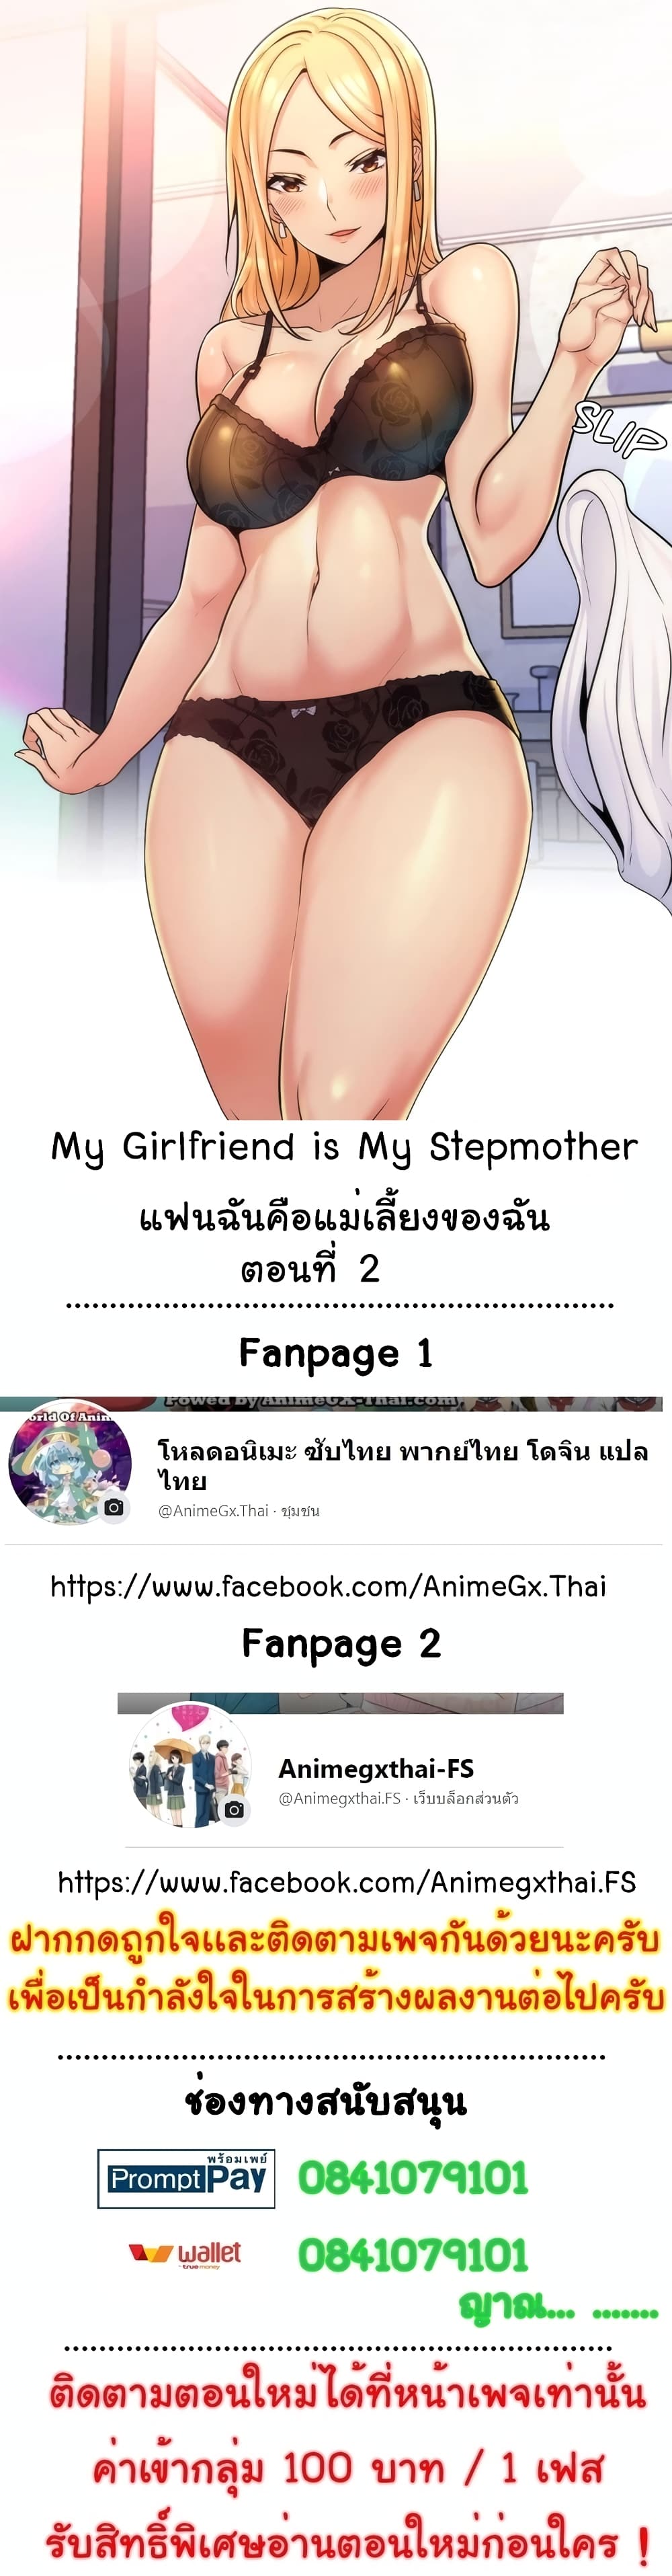 My Girlfriend is My Stepmother 2-2